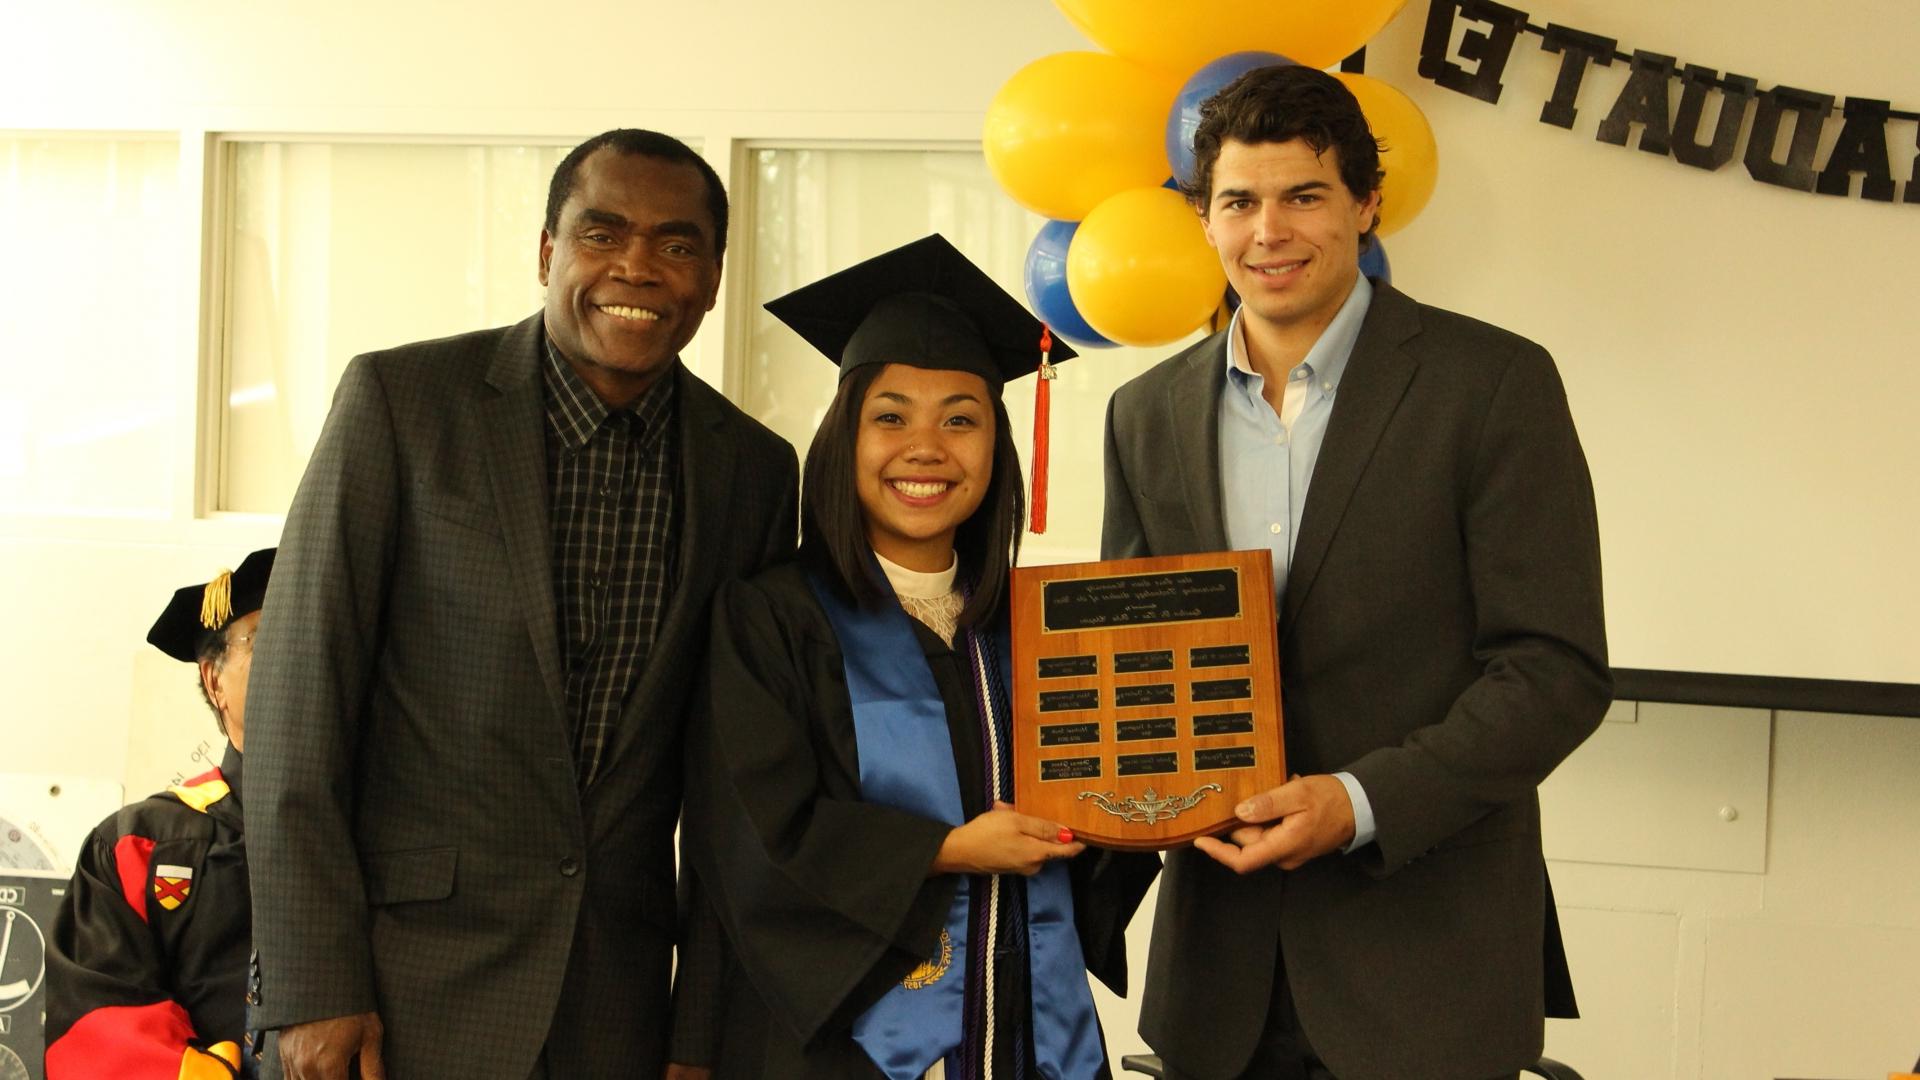 Thomas和Gianina获得2014年度科技学生奖